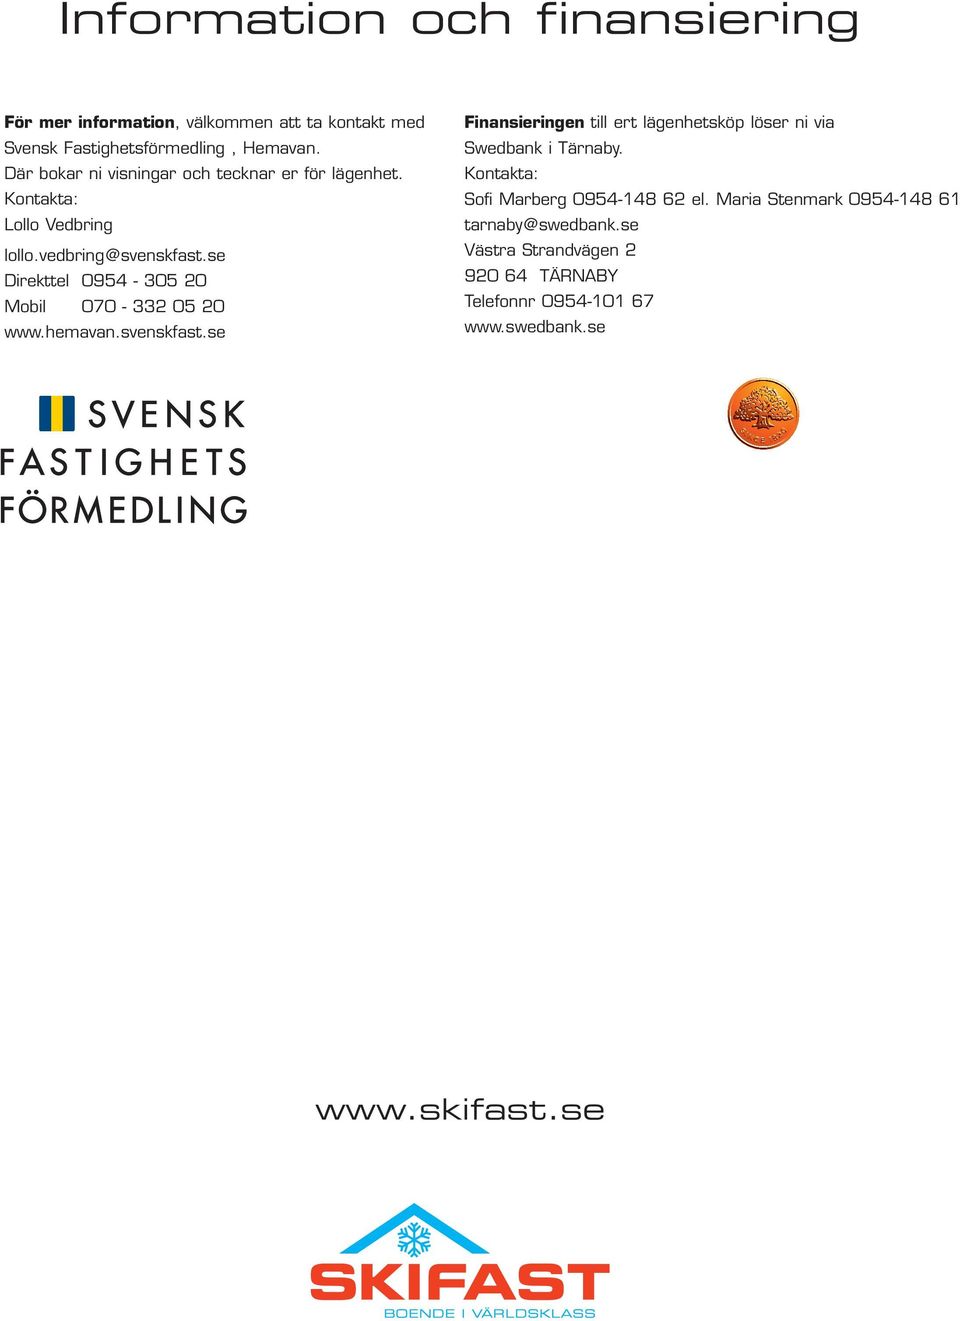 se Direkttel 0954-305 20 Mobil 070-332 05 20 www.hemavan.svenskfast.